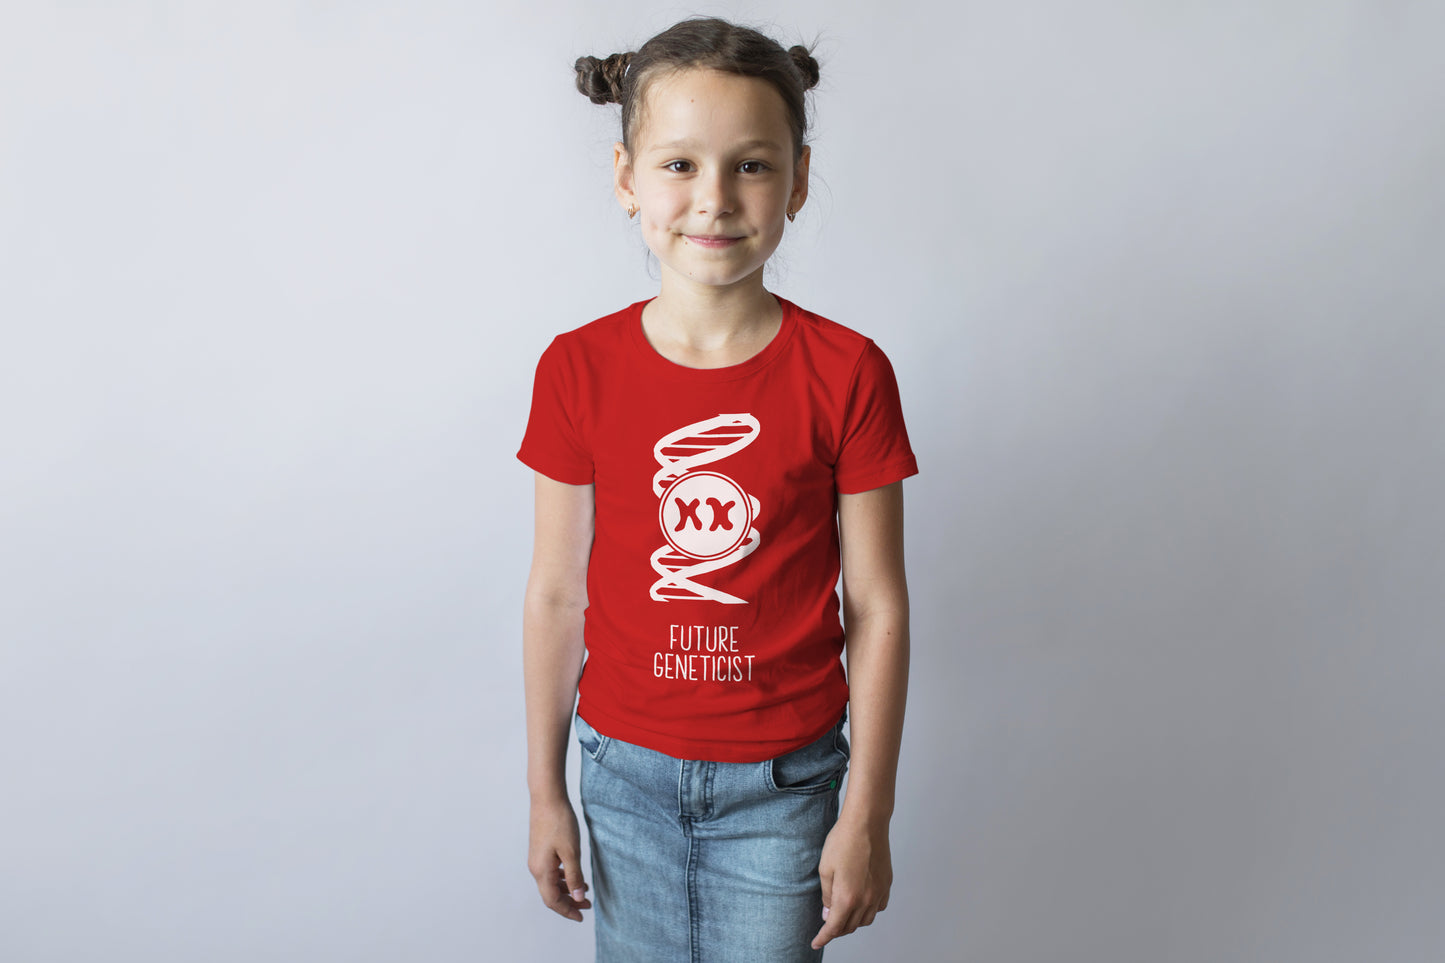 Future Geneticist T-shirt to Inspire Genetics Student